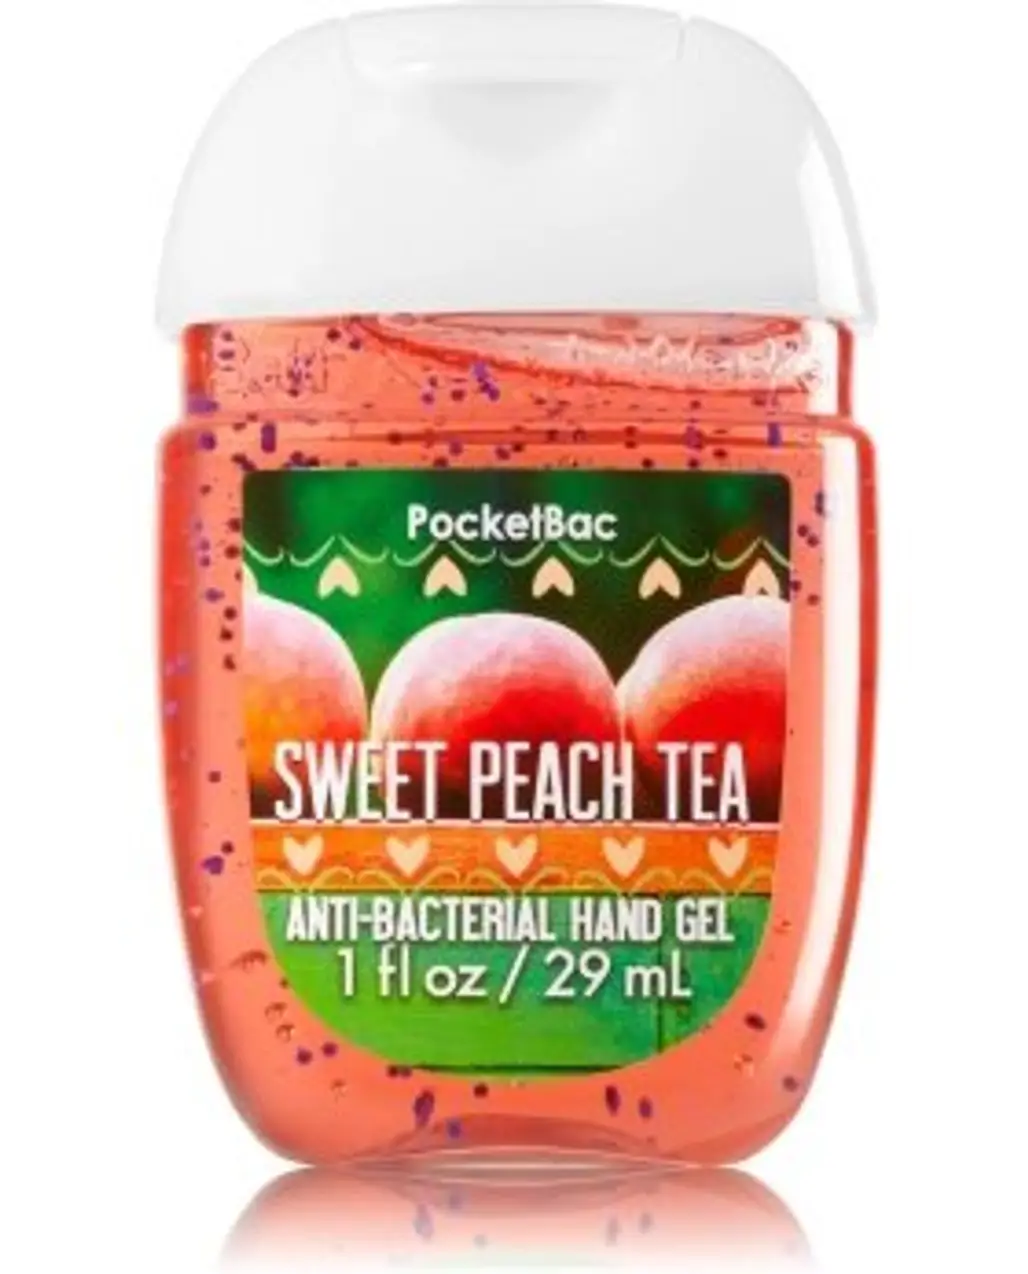 Sweet Peach Tea